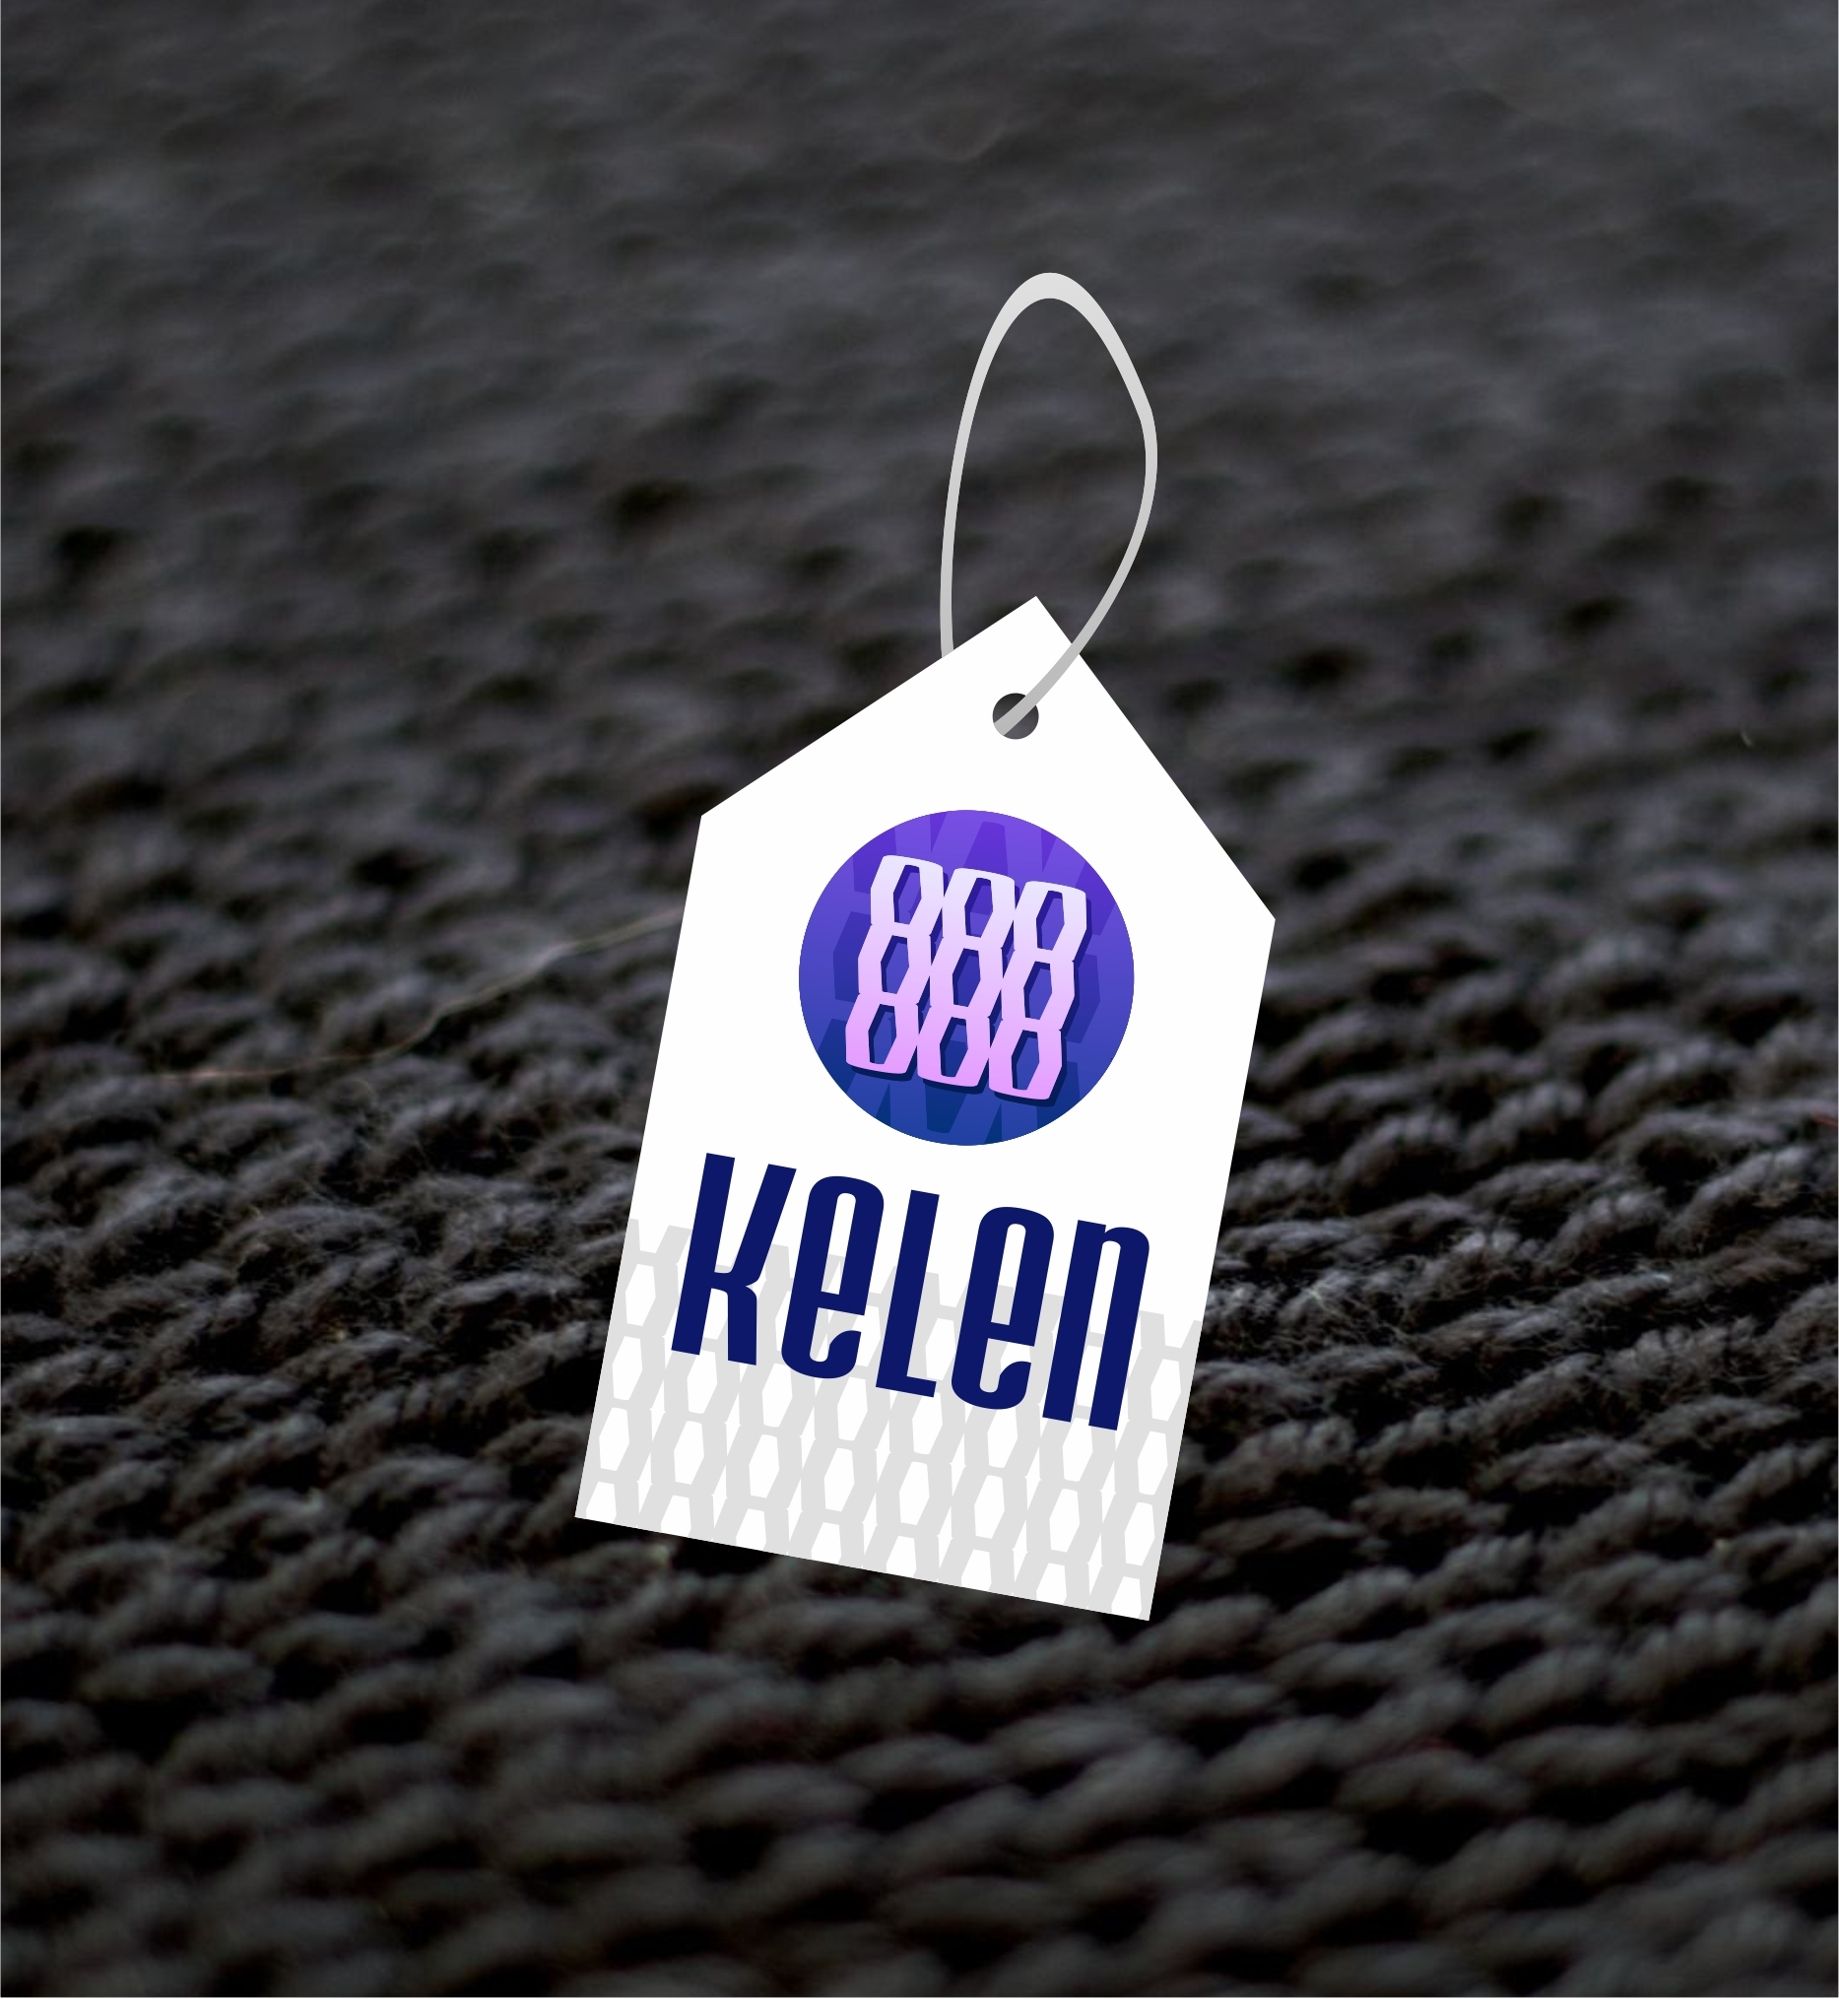 Логотип для KELEN - дизайнер rowan